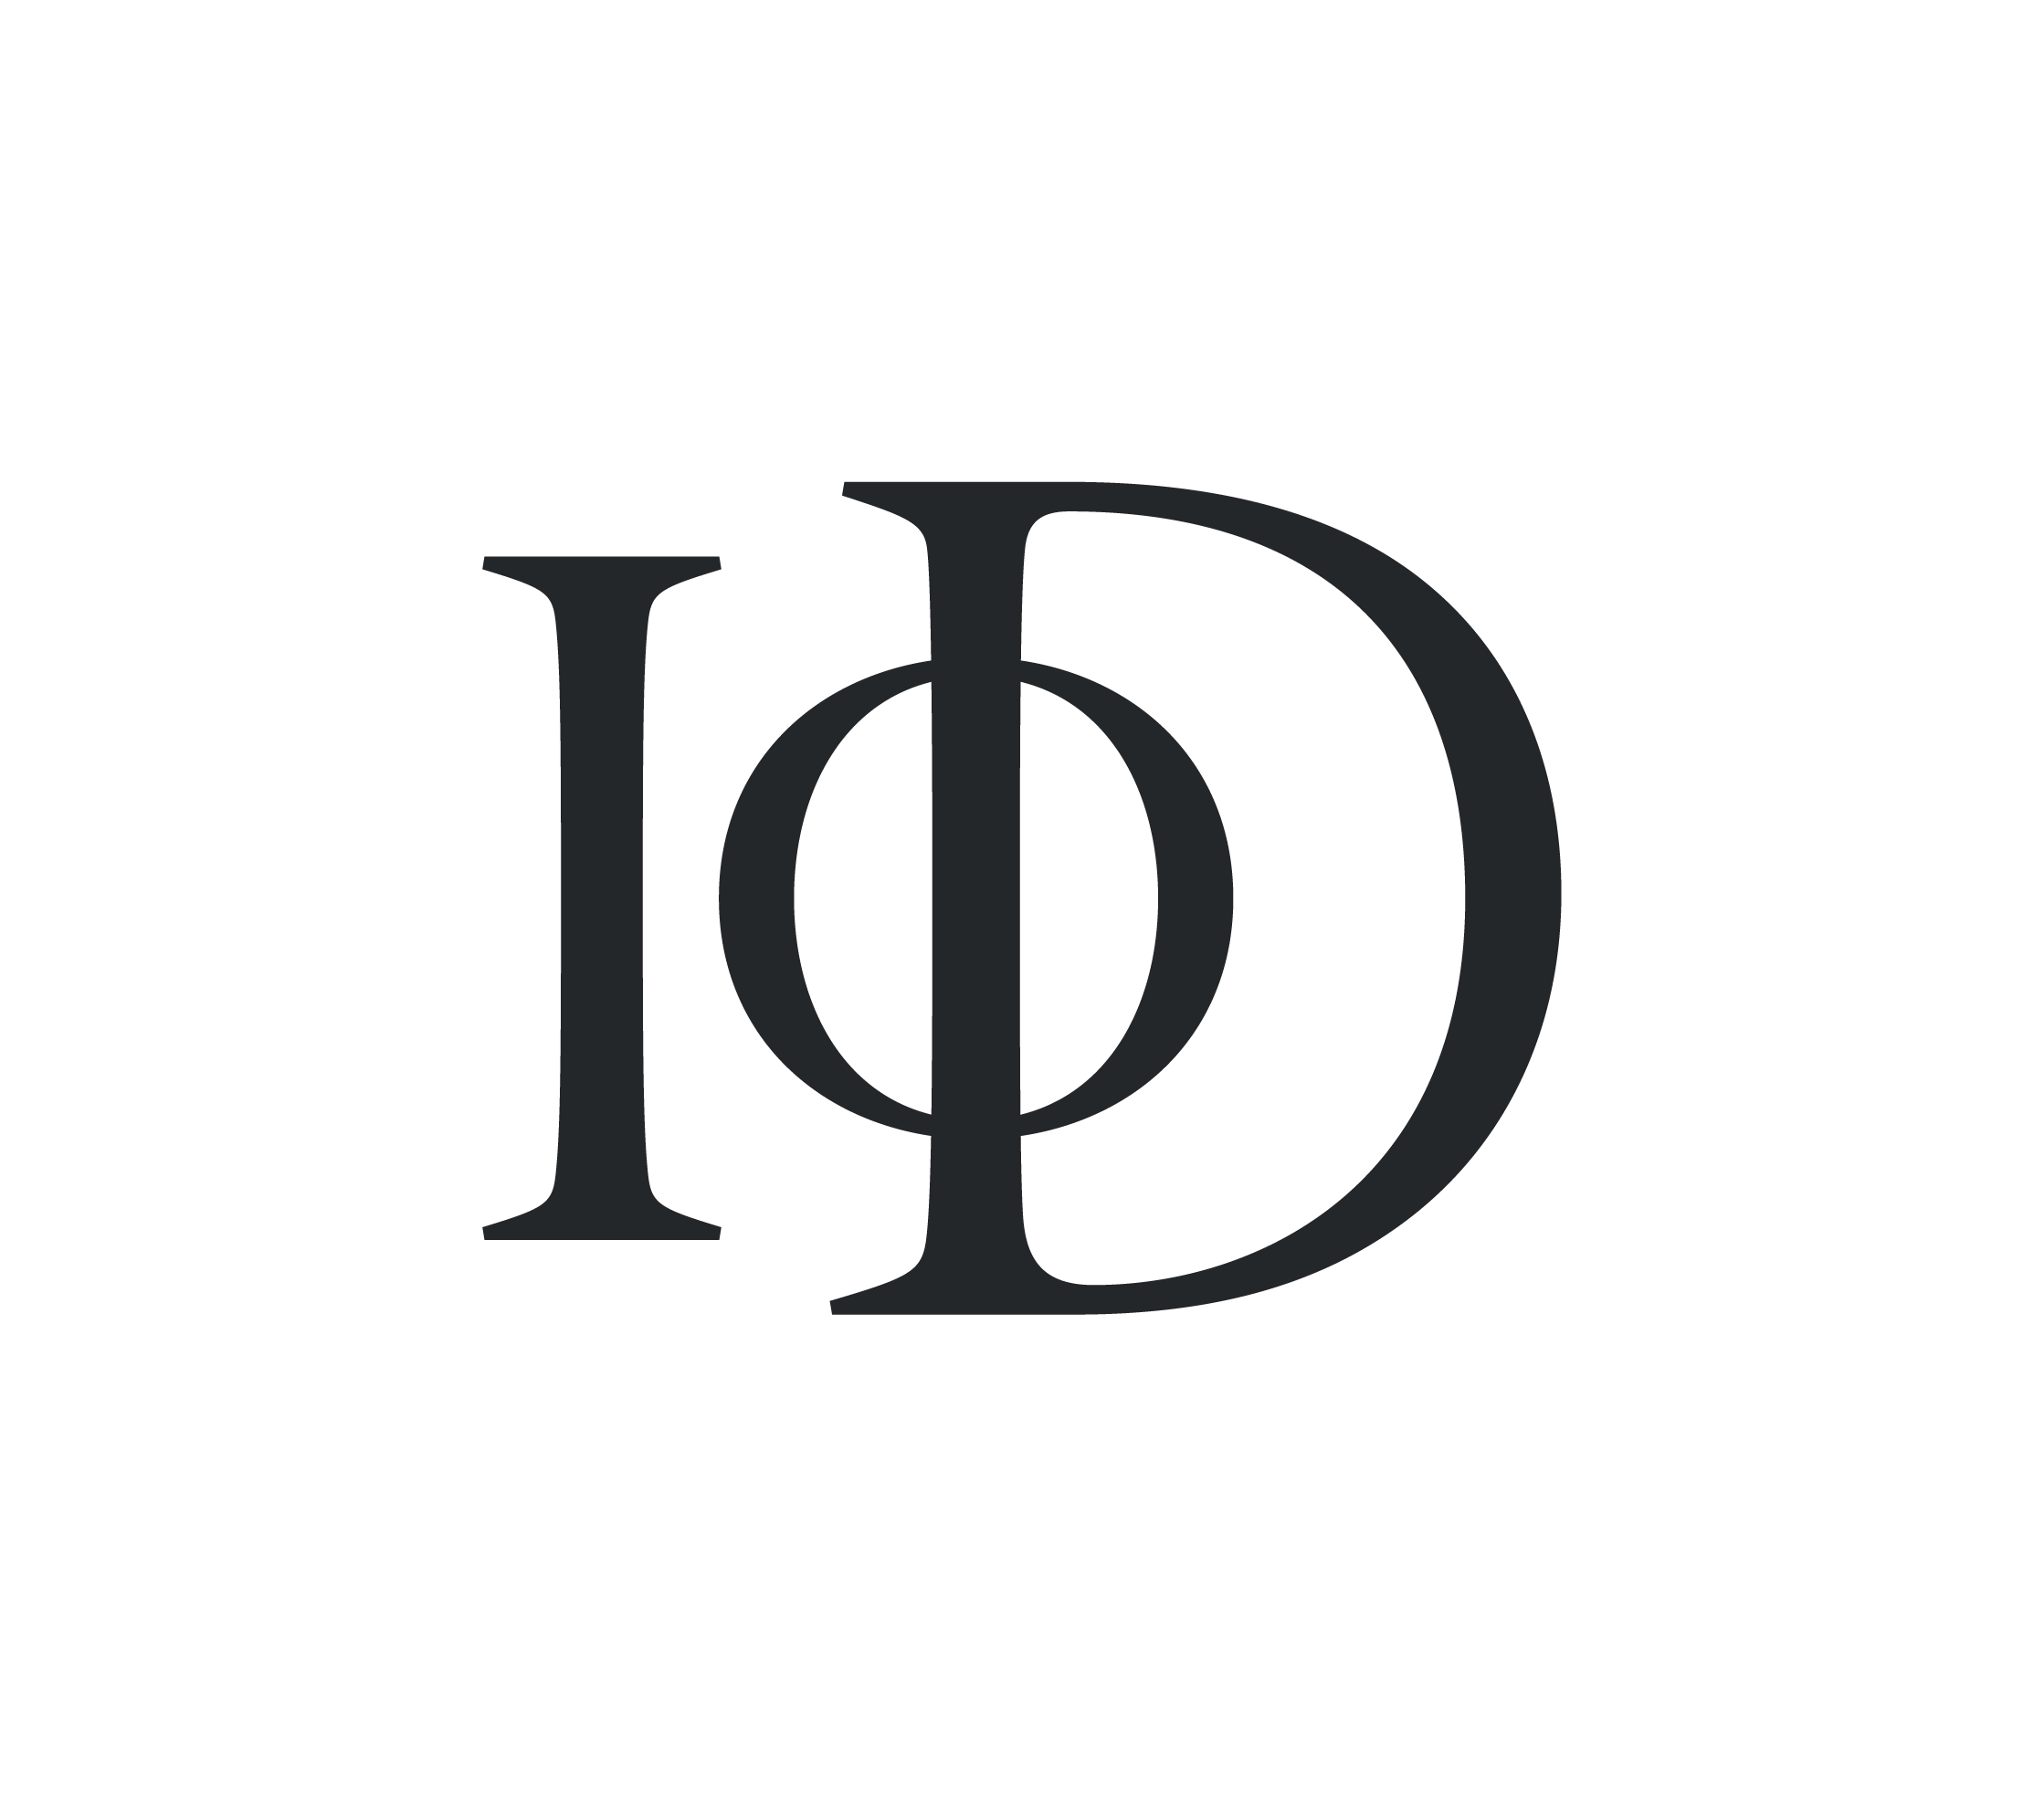 IoD_Master Logo_Mono_RGB_IoD_K November 2021.png